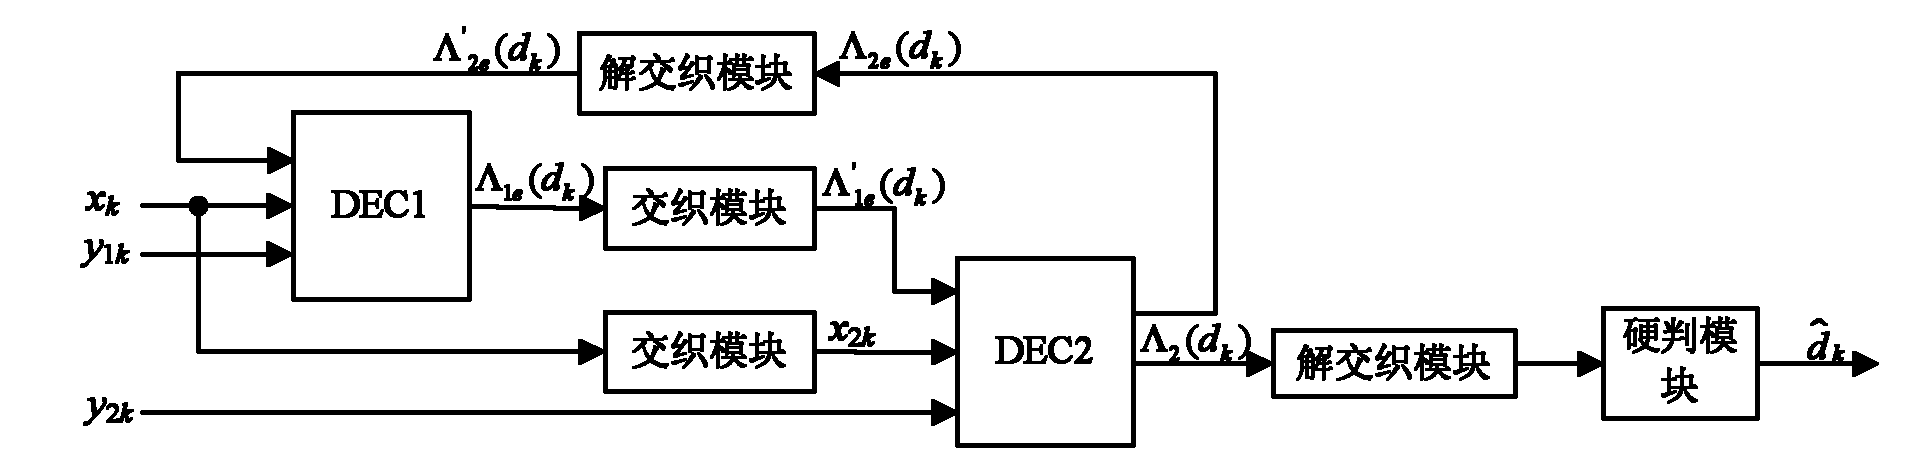 Turbo decoding method and device